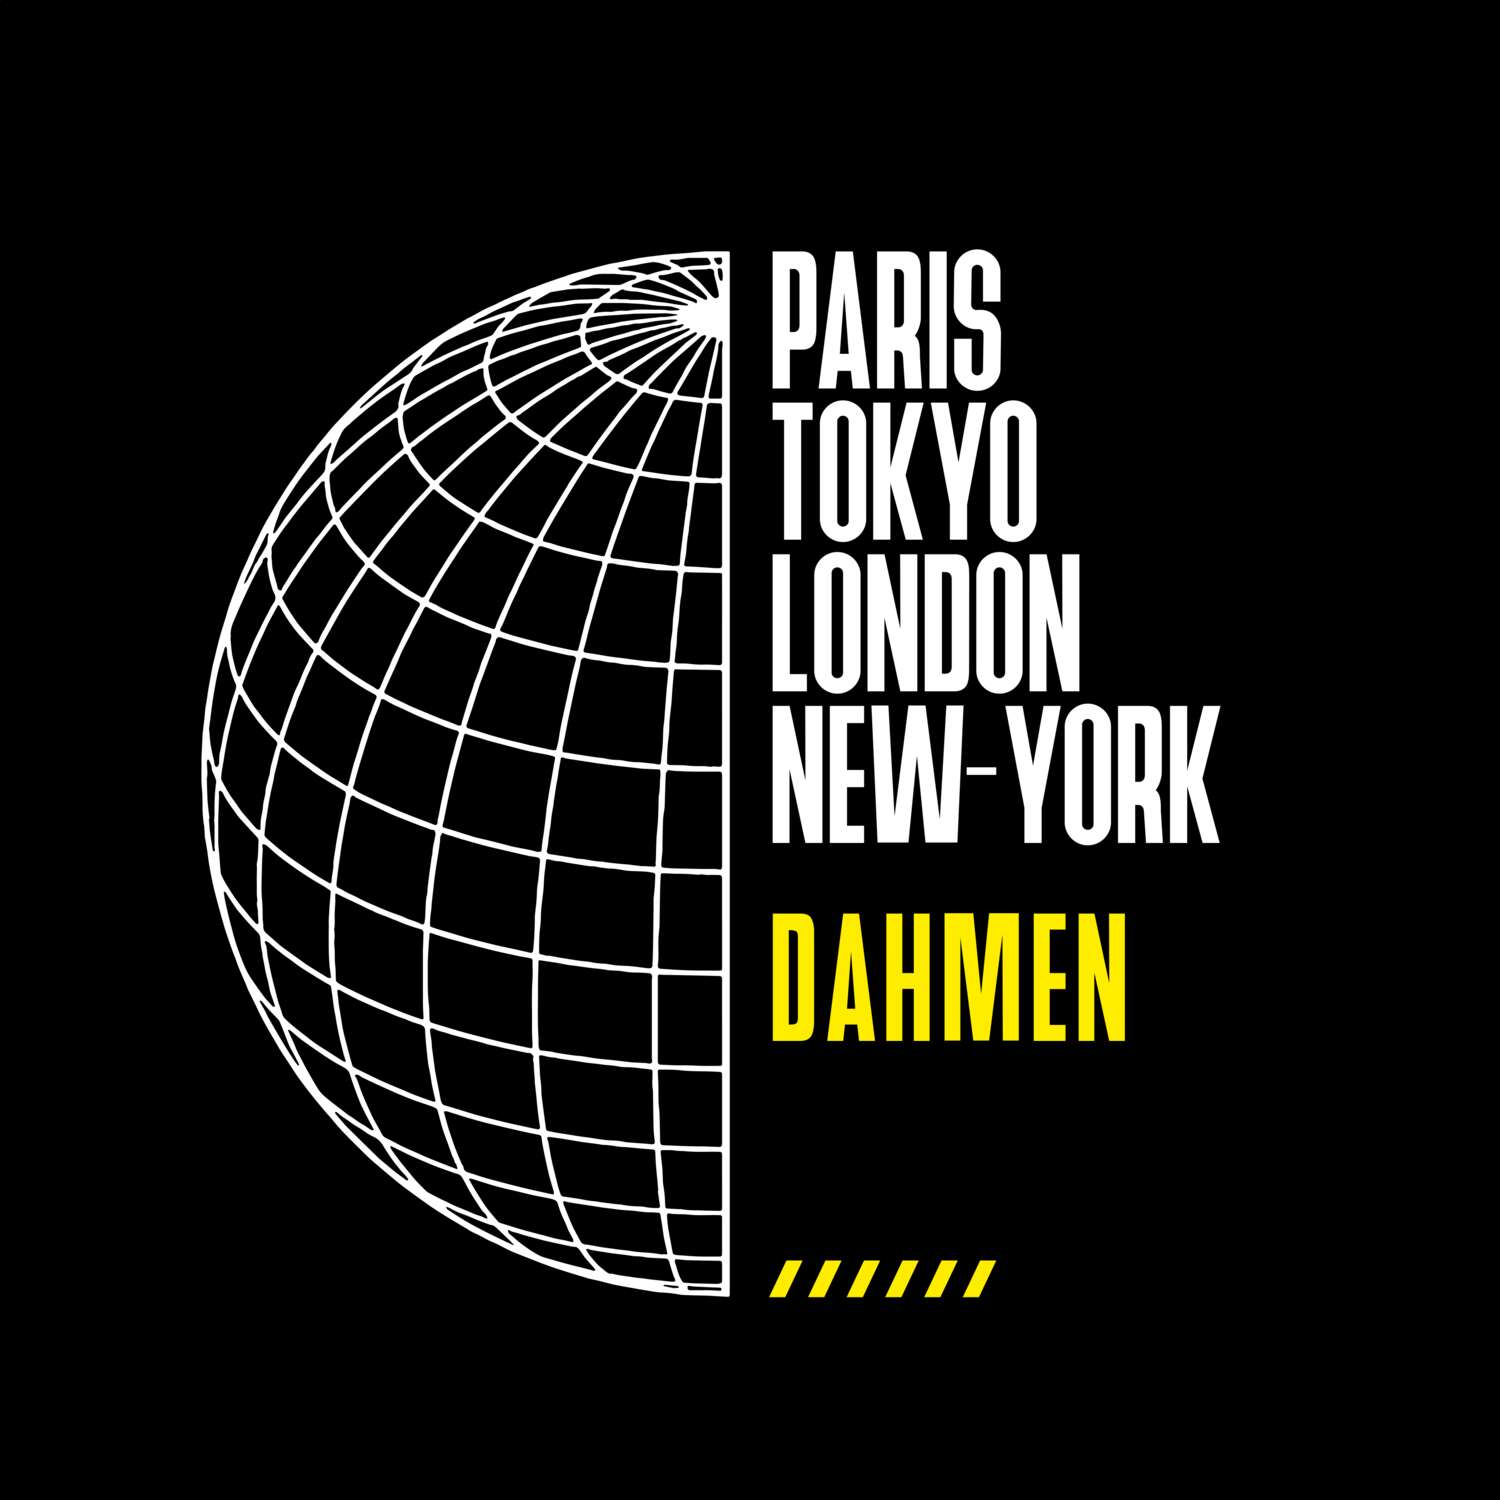 Dahmen T-Shirt »Paris Tokyo London«